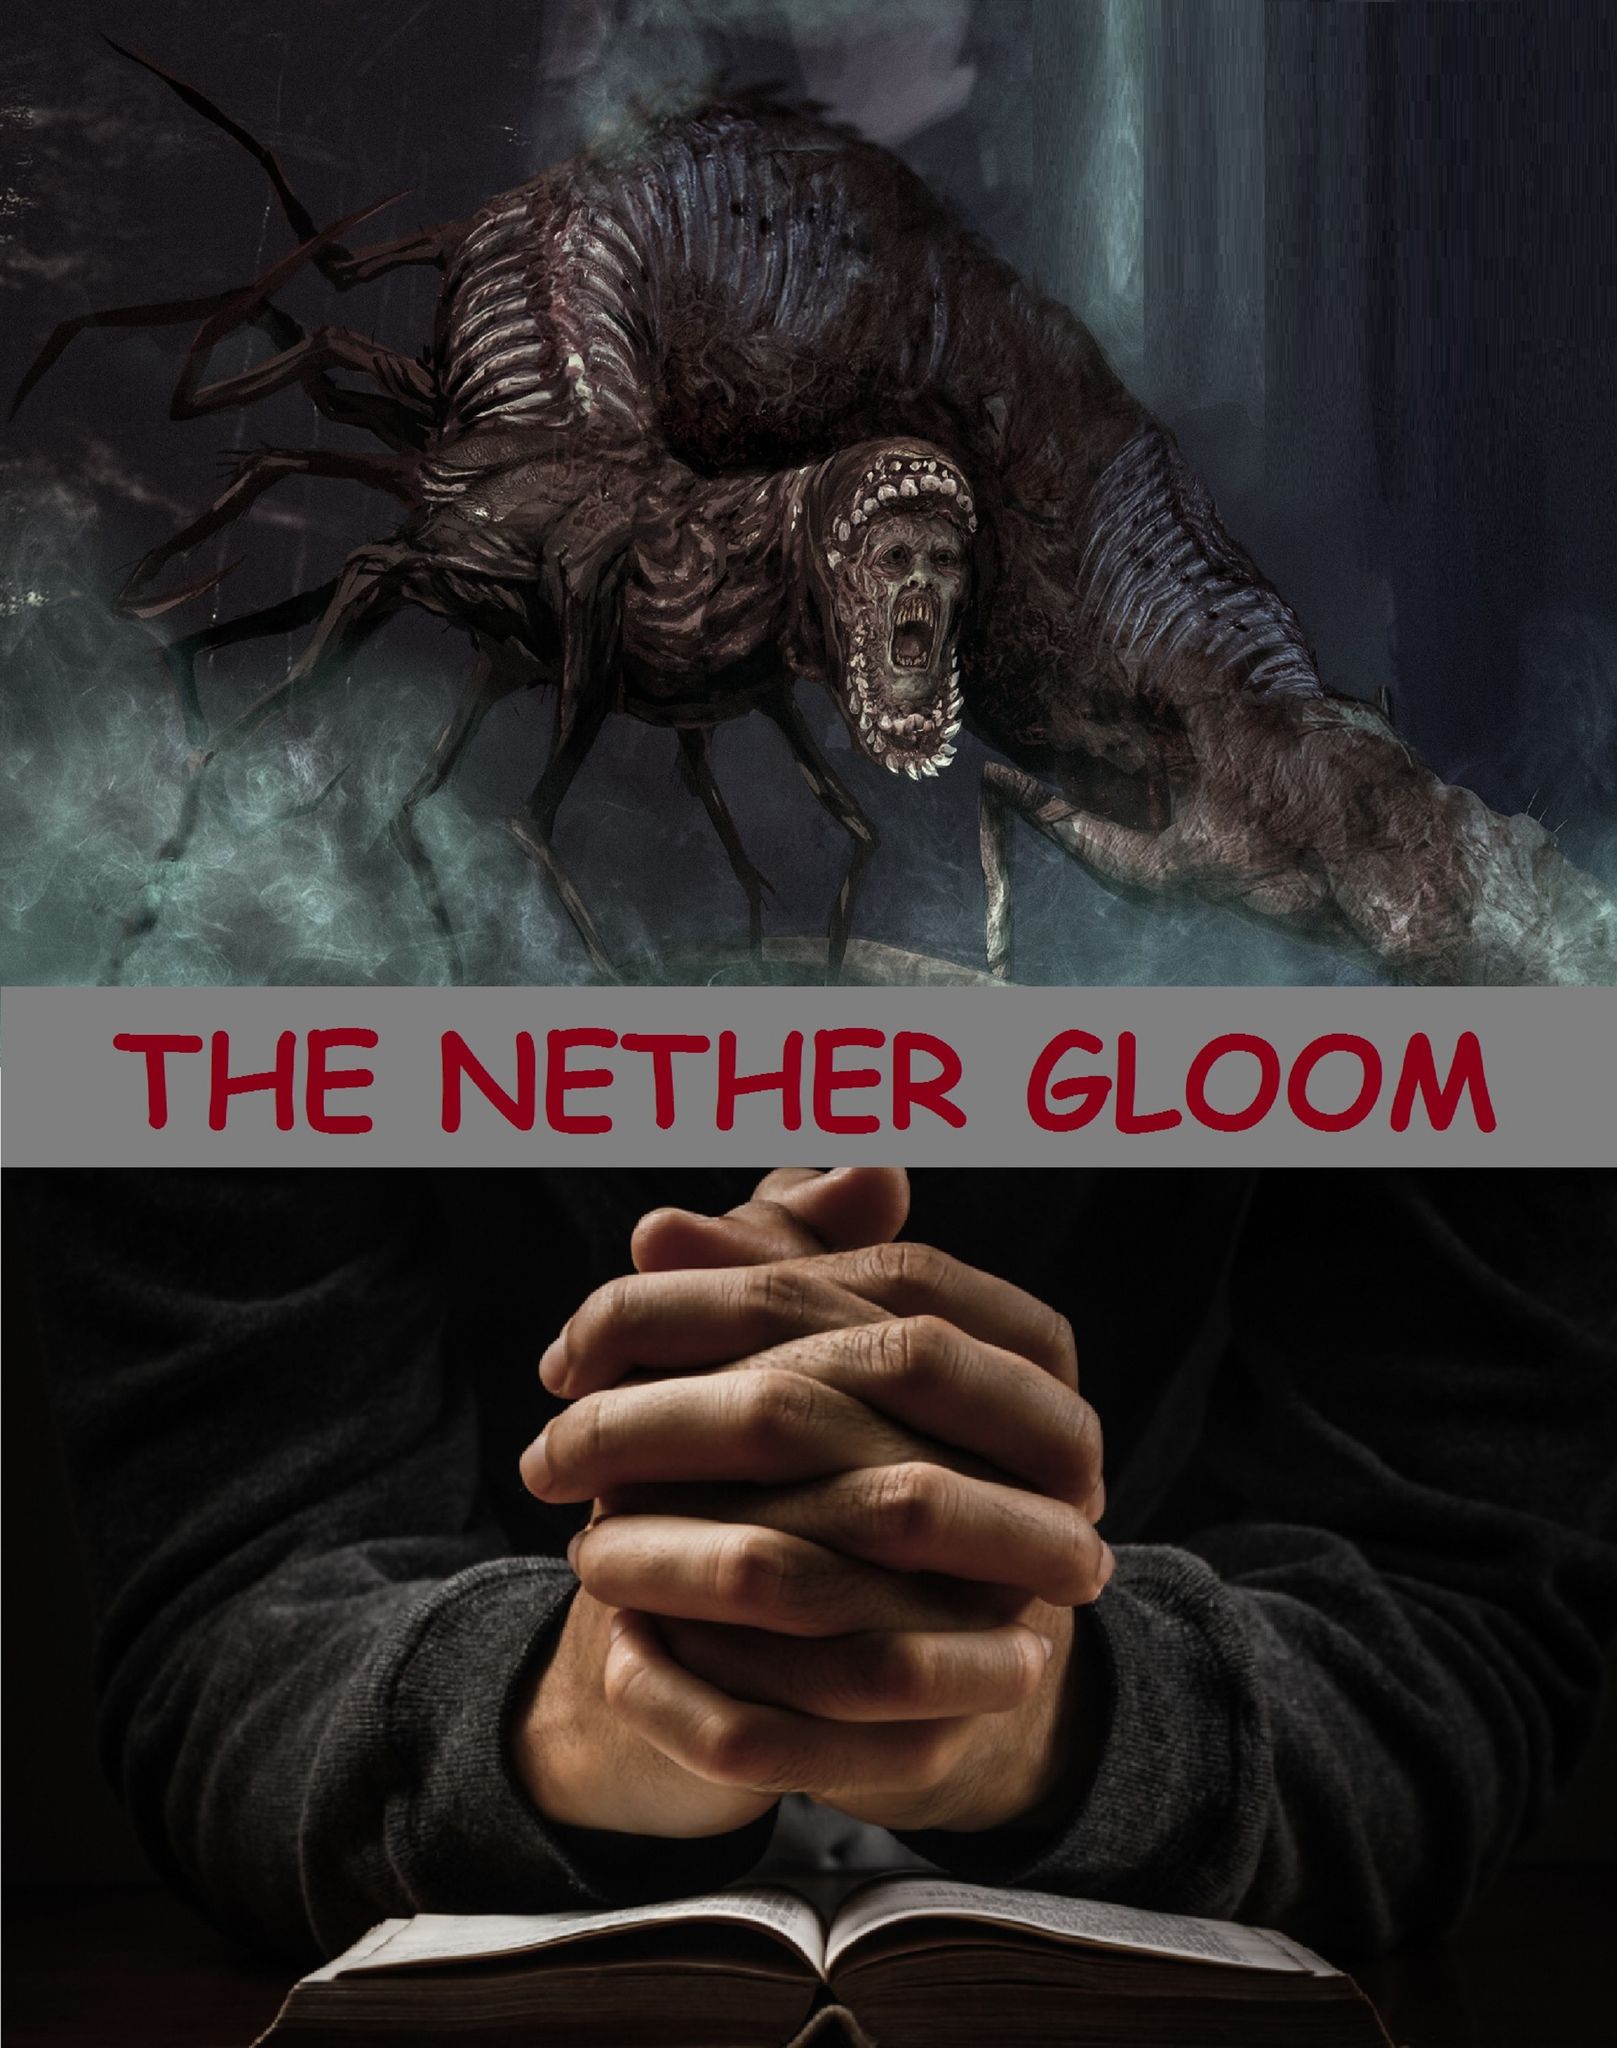 THE NETHER GLOOM